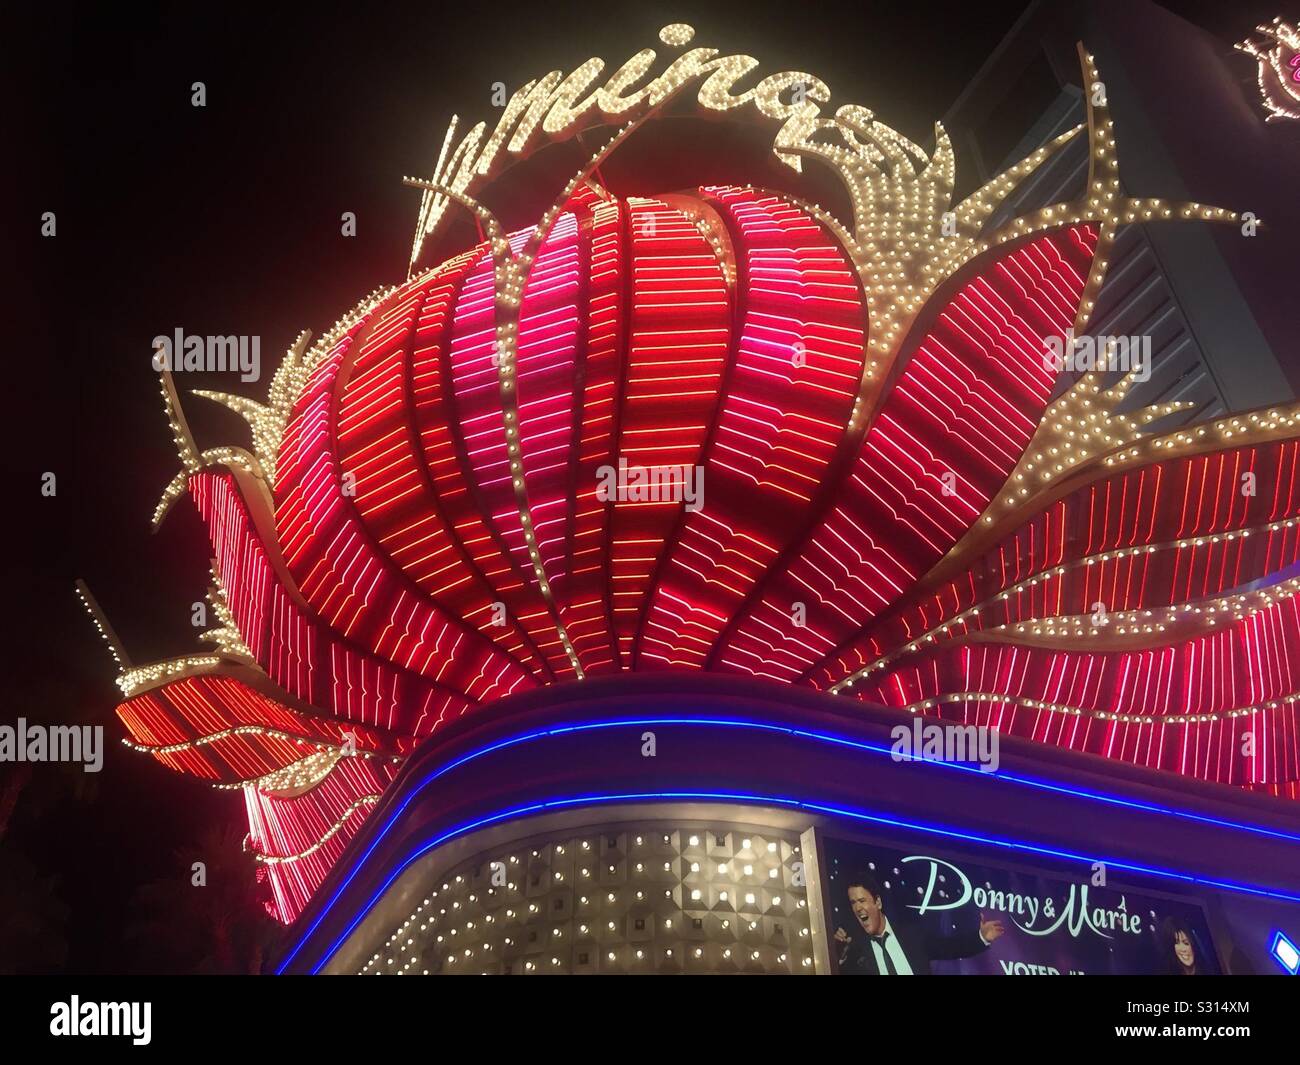 Flamingo Hotel on the Strip in Las Vegas, NV at night Stock Photo - Alamy